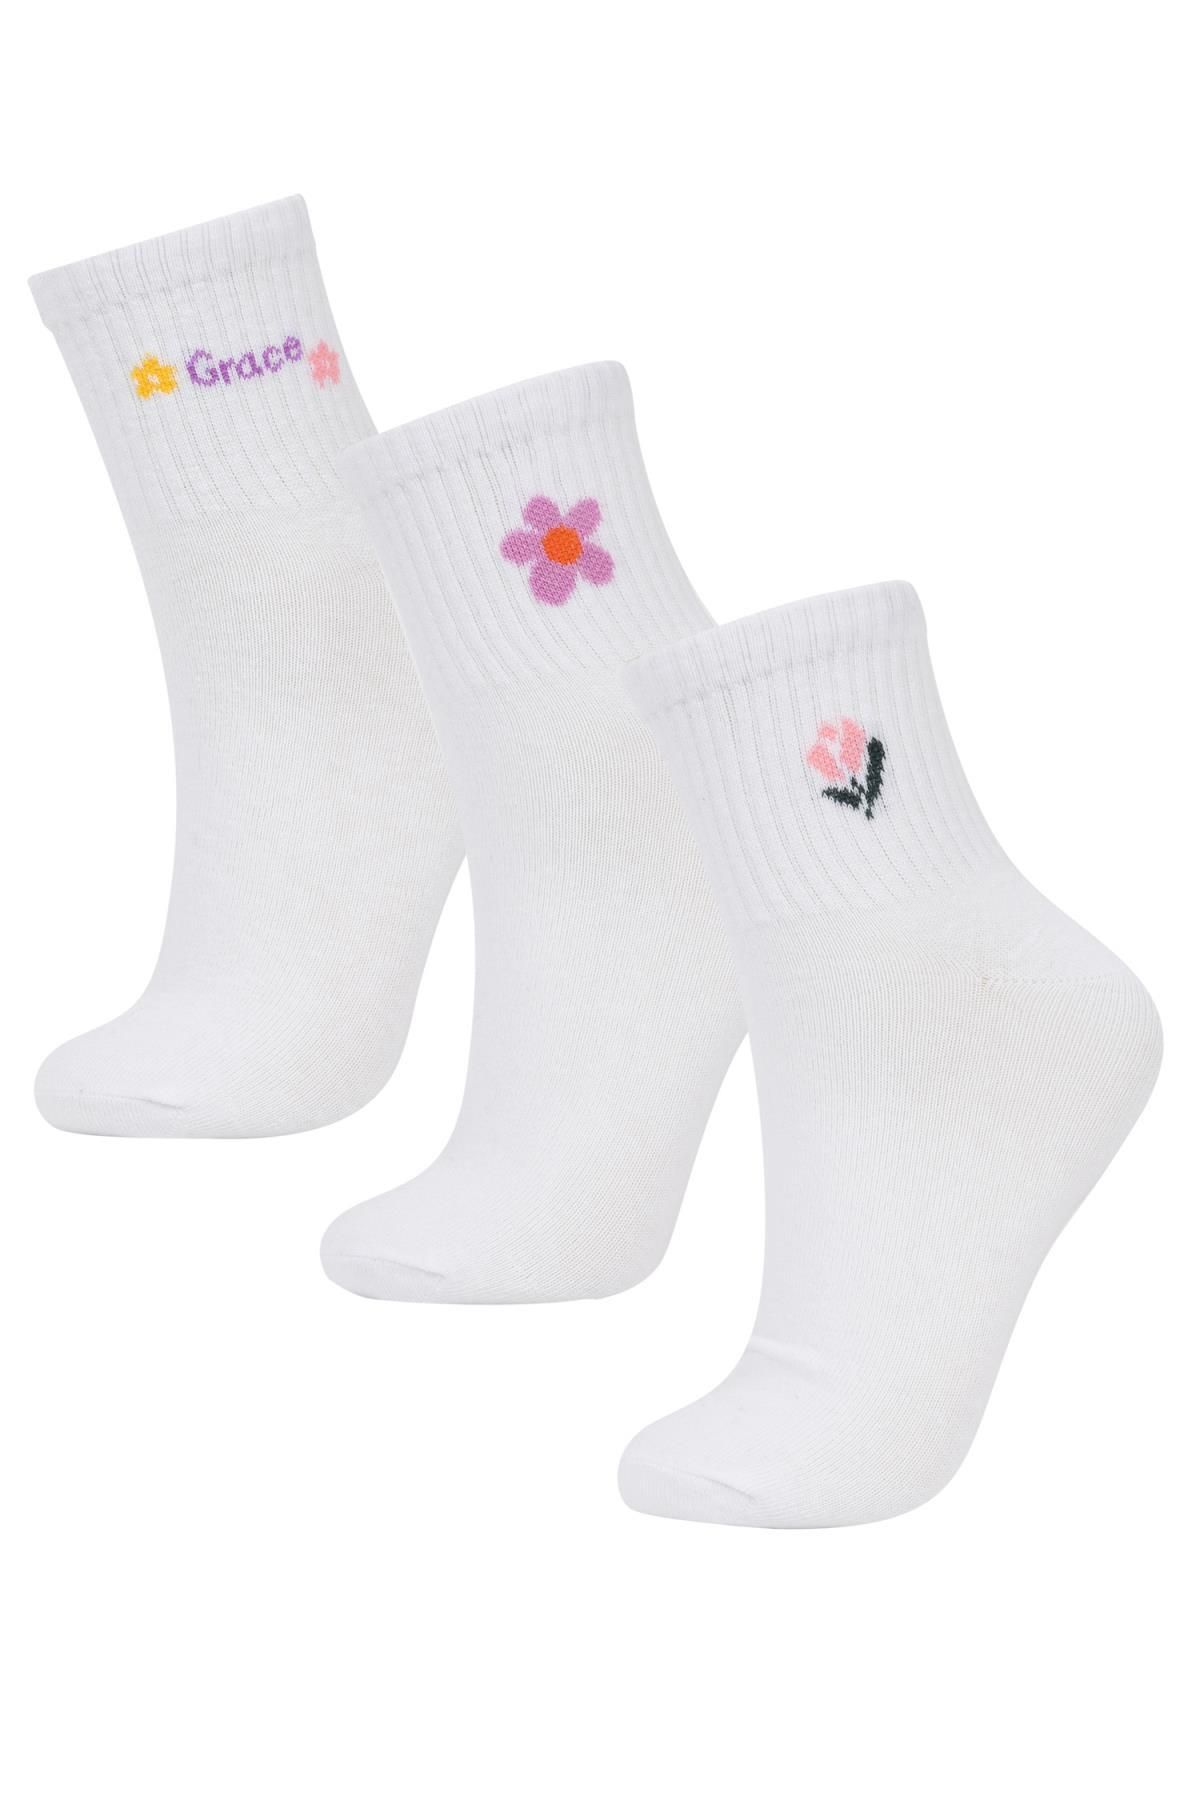 Defacto Kadın Çiçekli 3lü Pamuklu Soket Çorap B6091axns